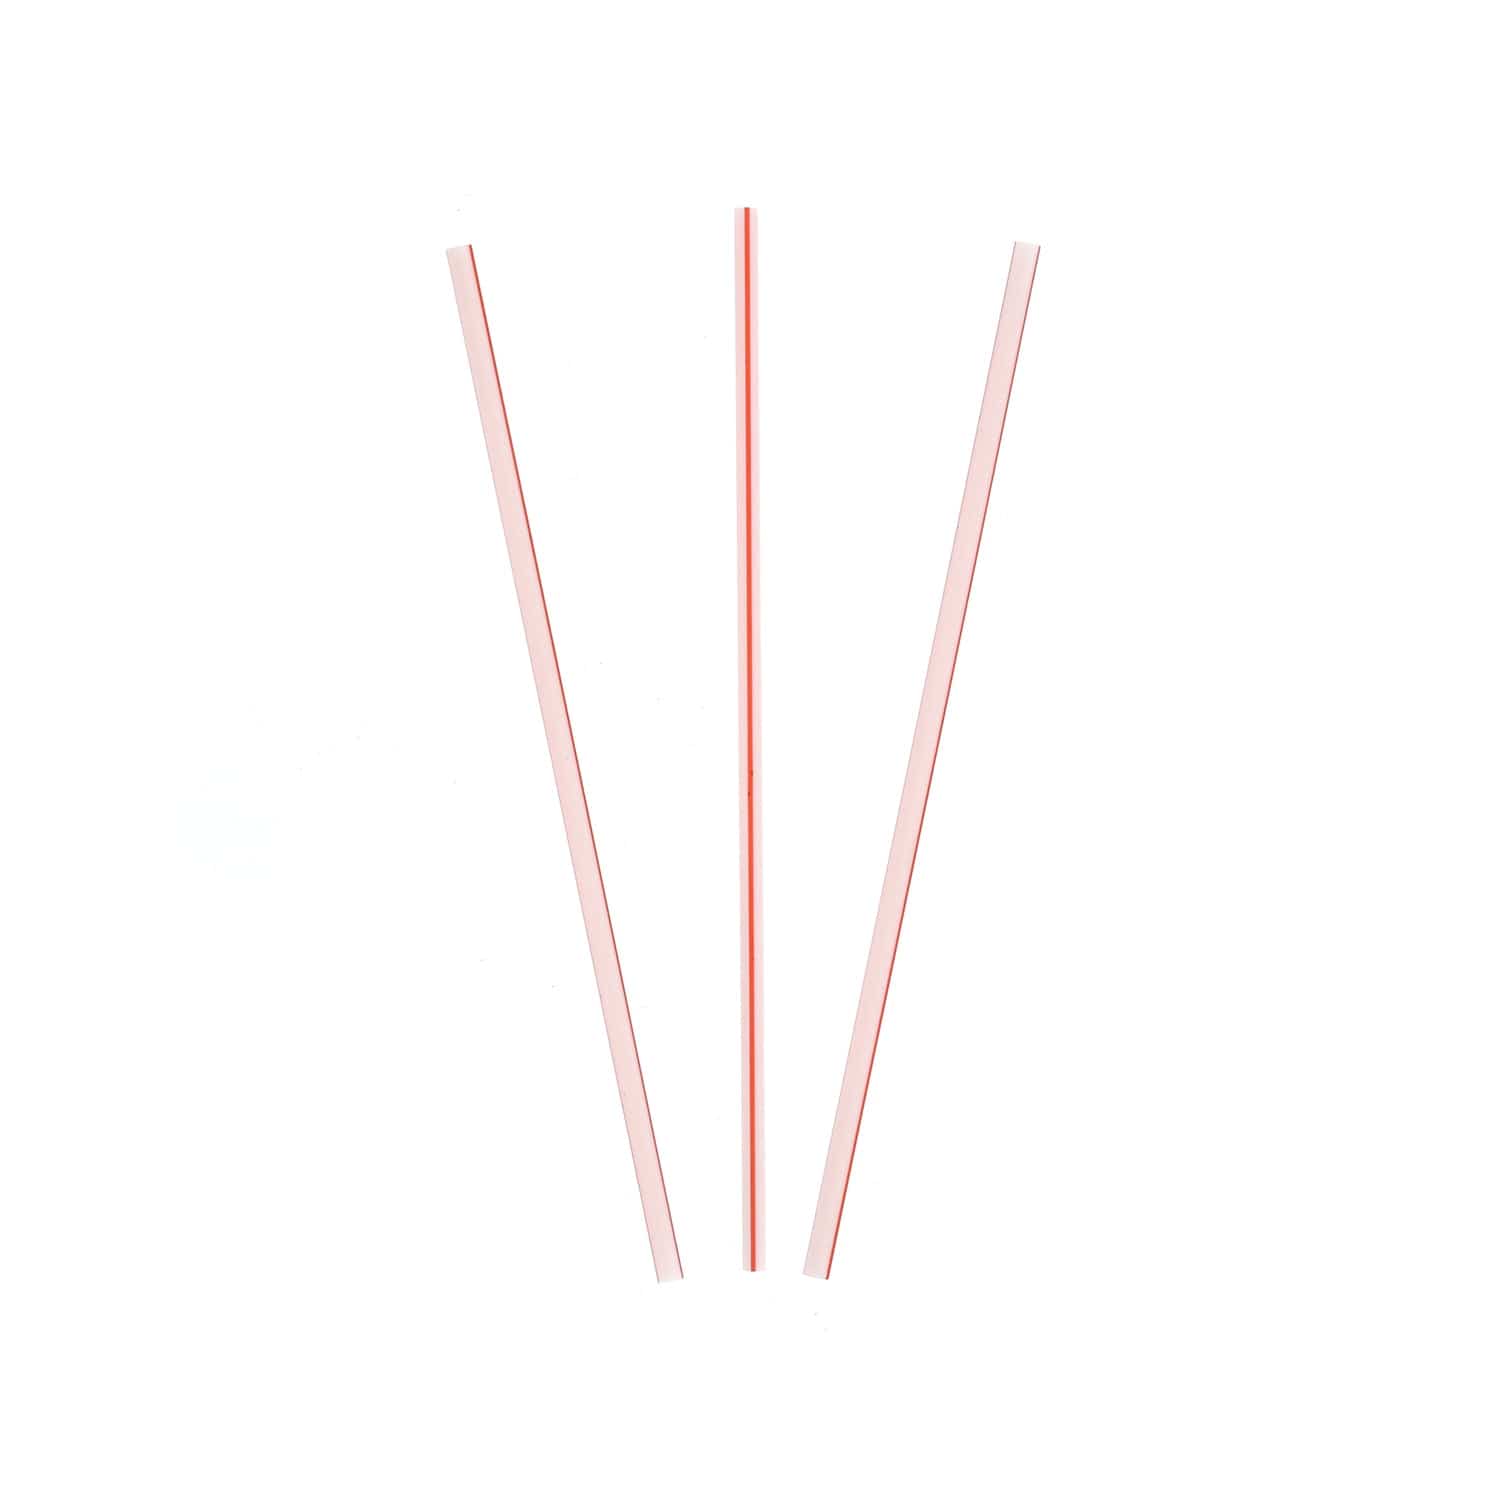 Light Pink and White Striped Stirring Straws